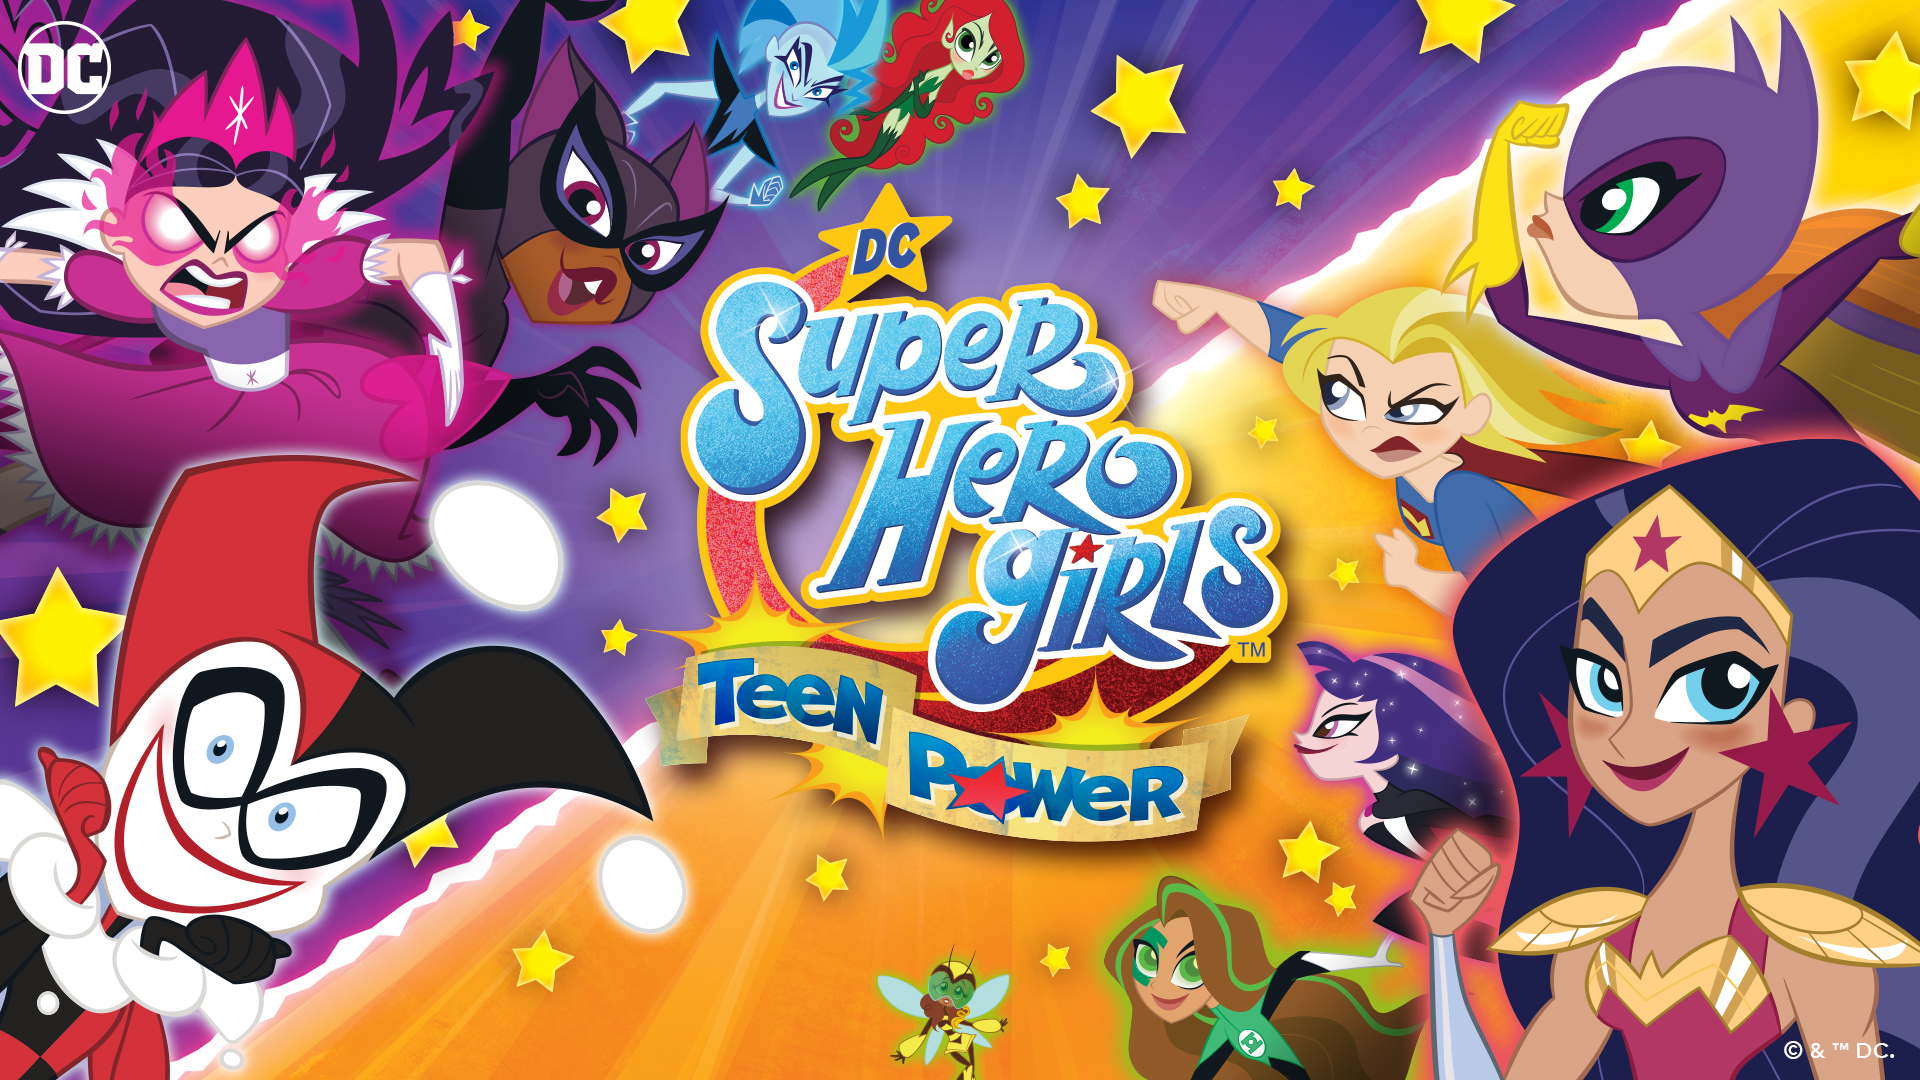 DC Super Hero Girls Teen Power 01